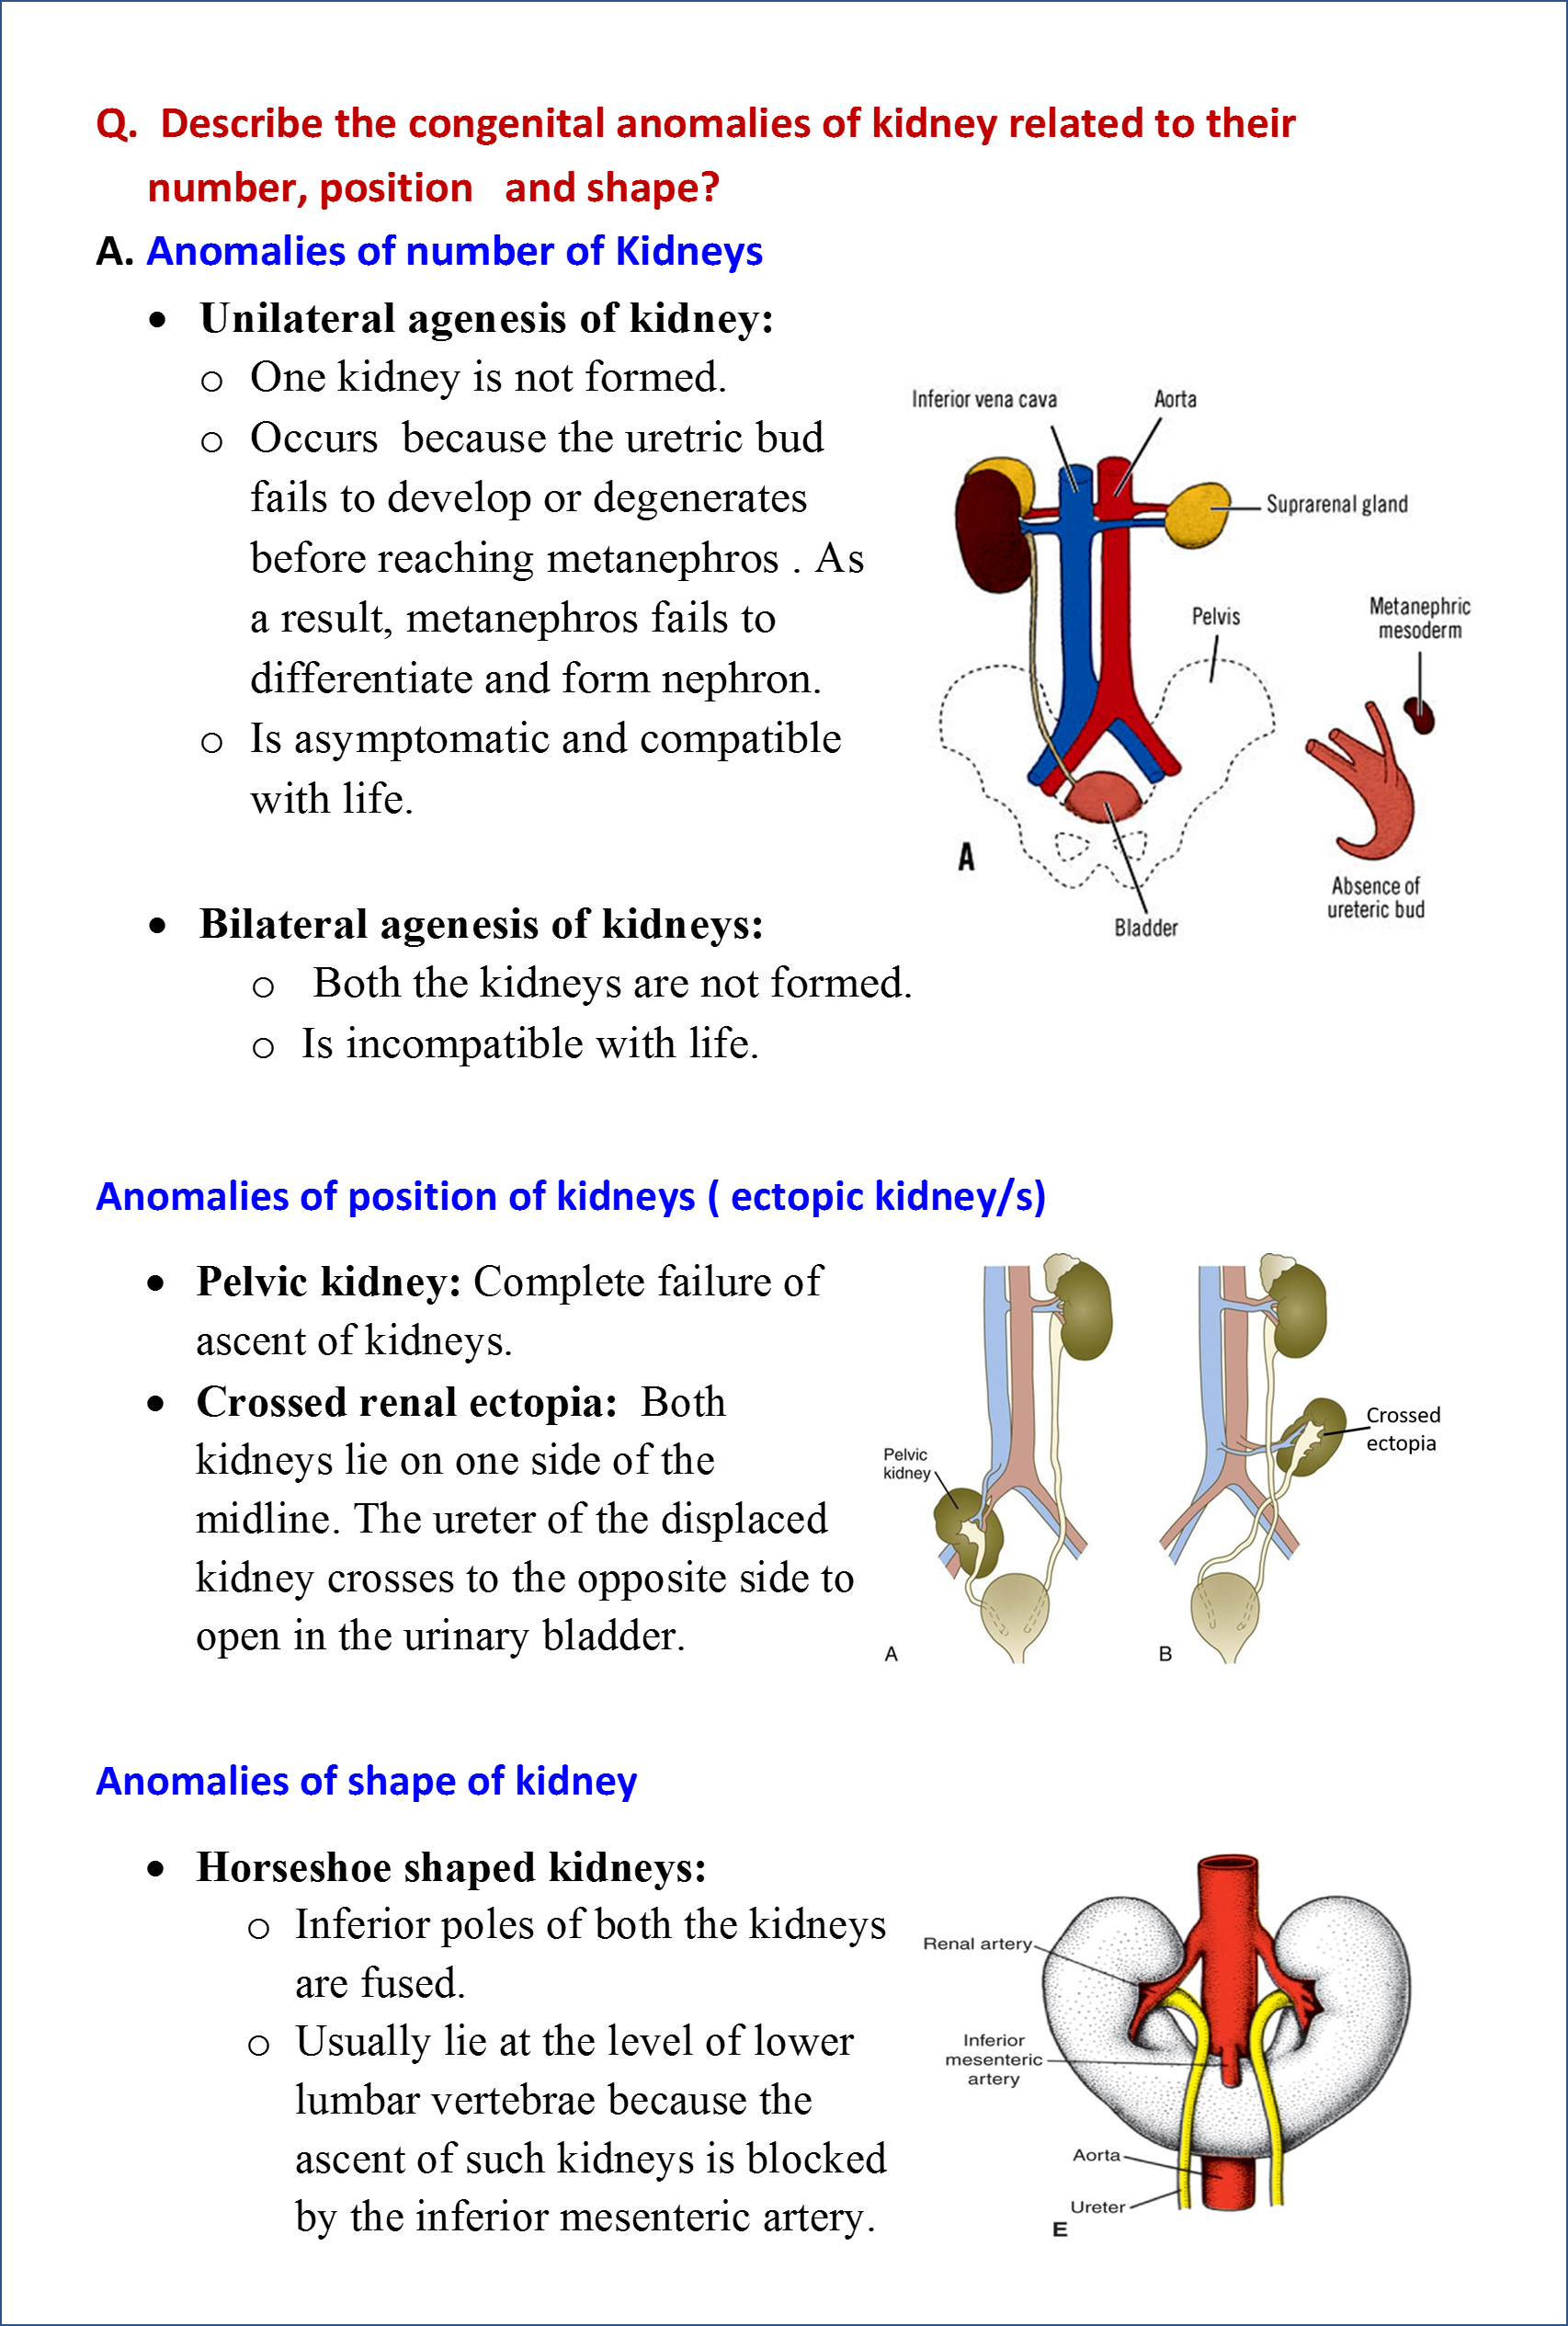 congenital anaomalies of kidney